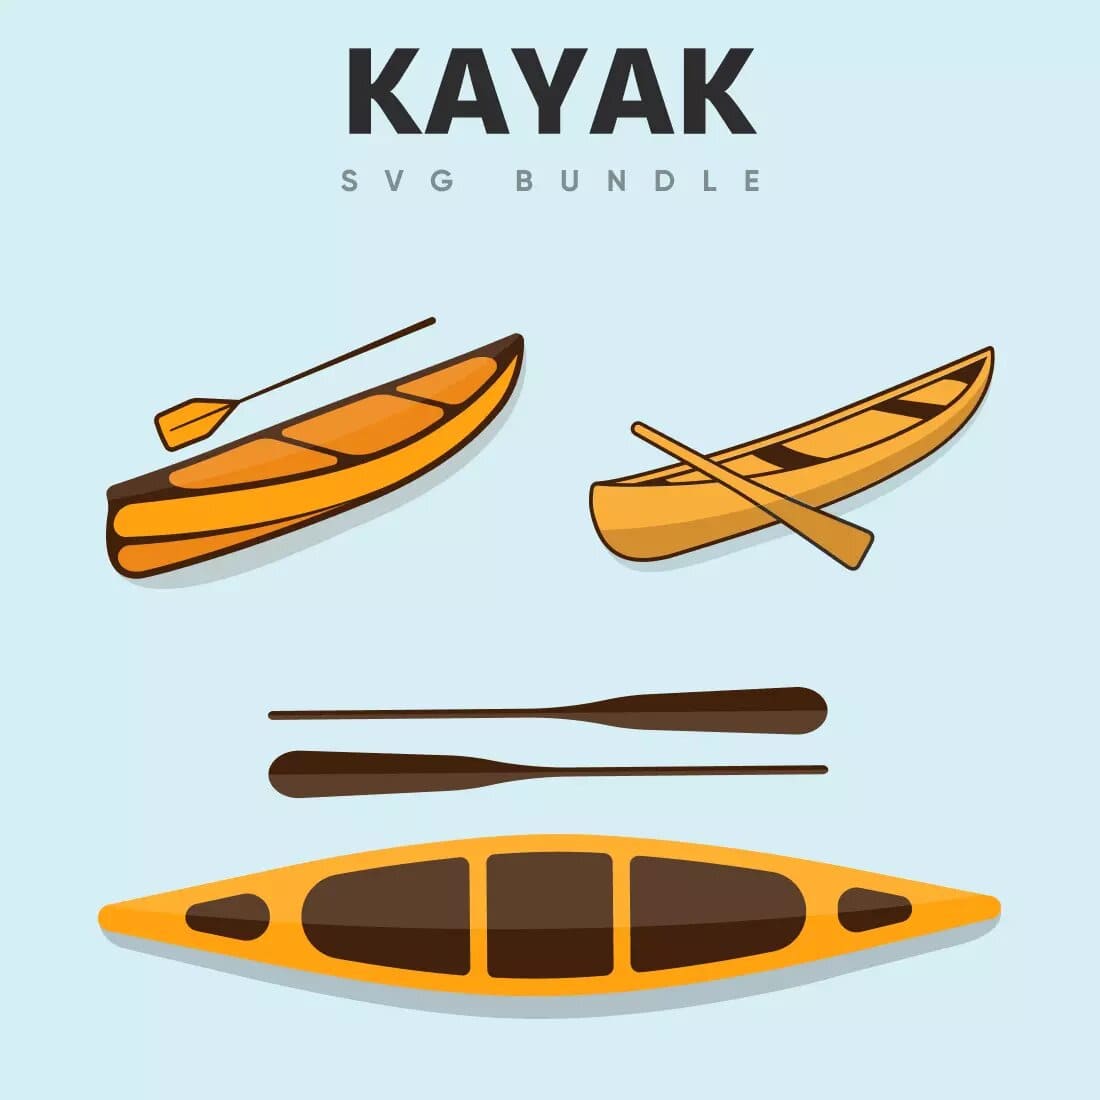 Kayak SVG Bundle Preview 11.